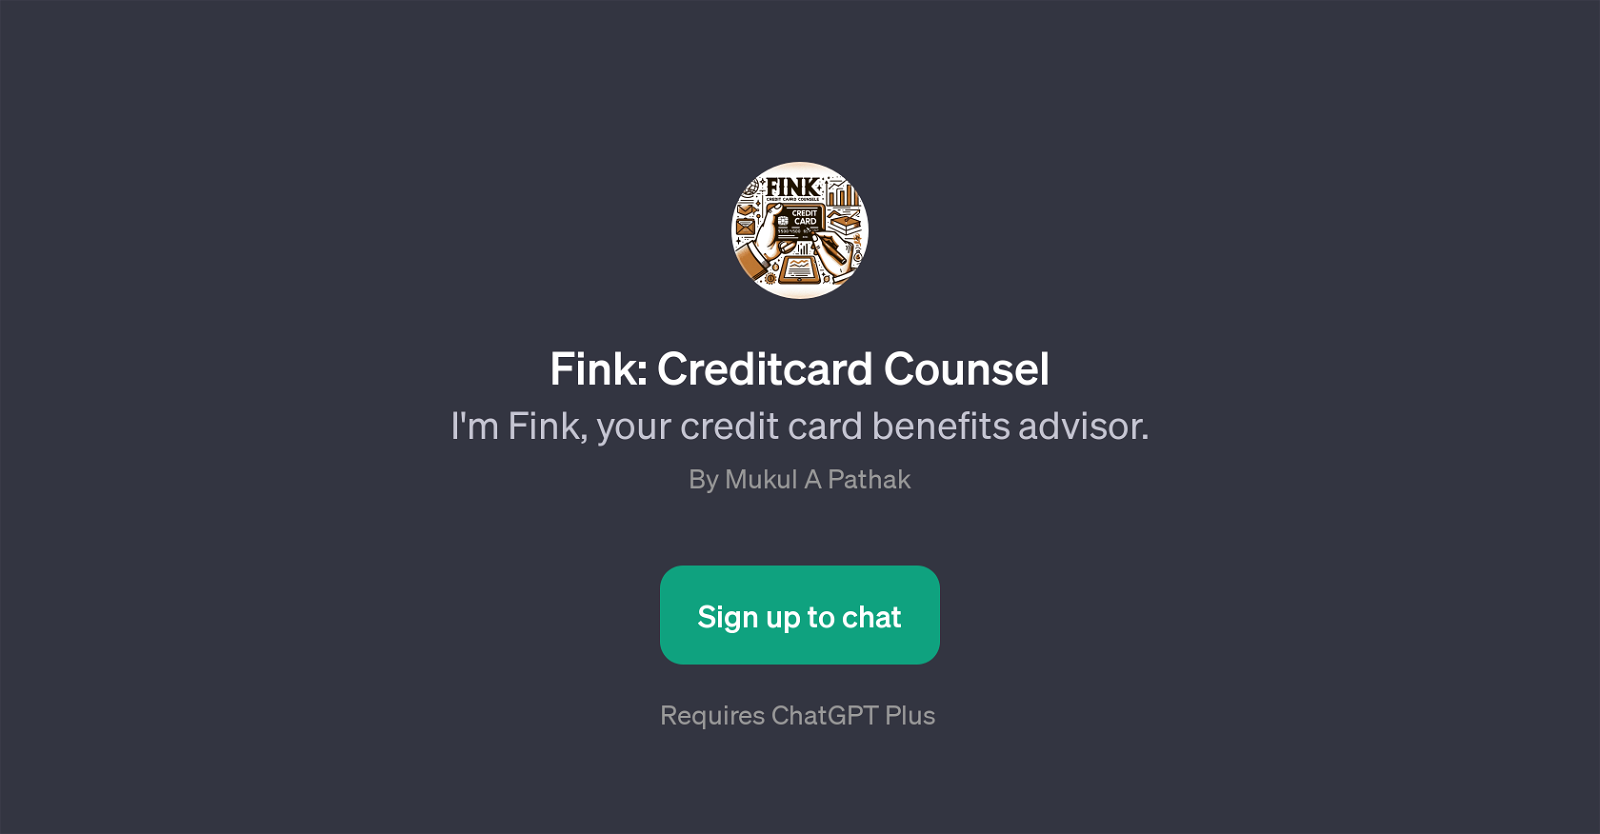 Fink: Creditcard Counsel website